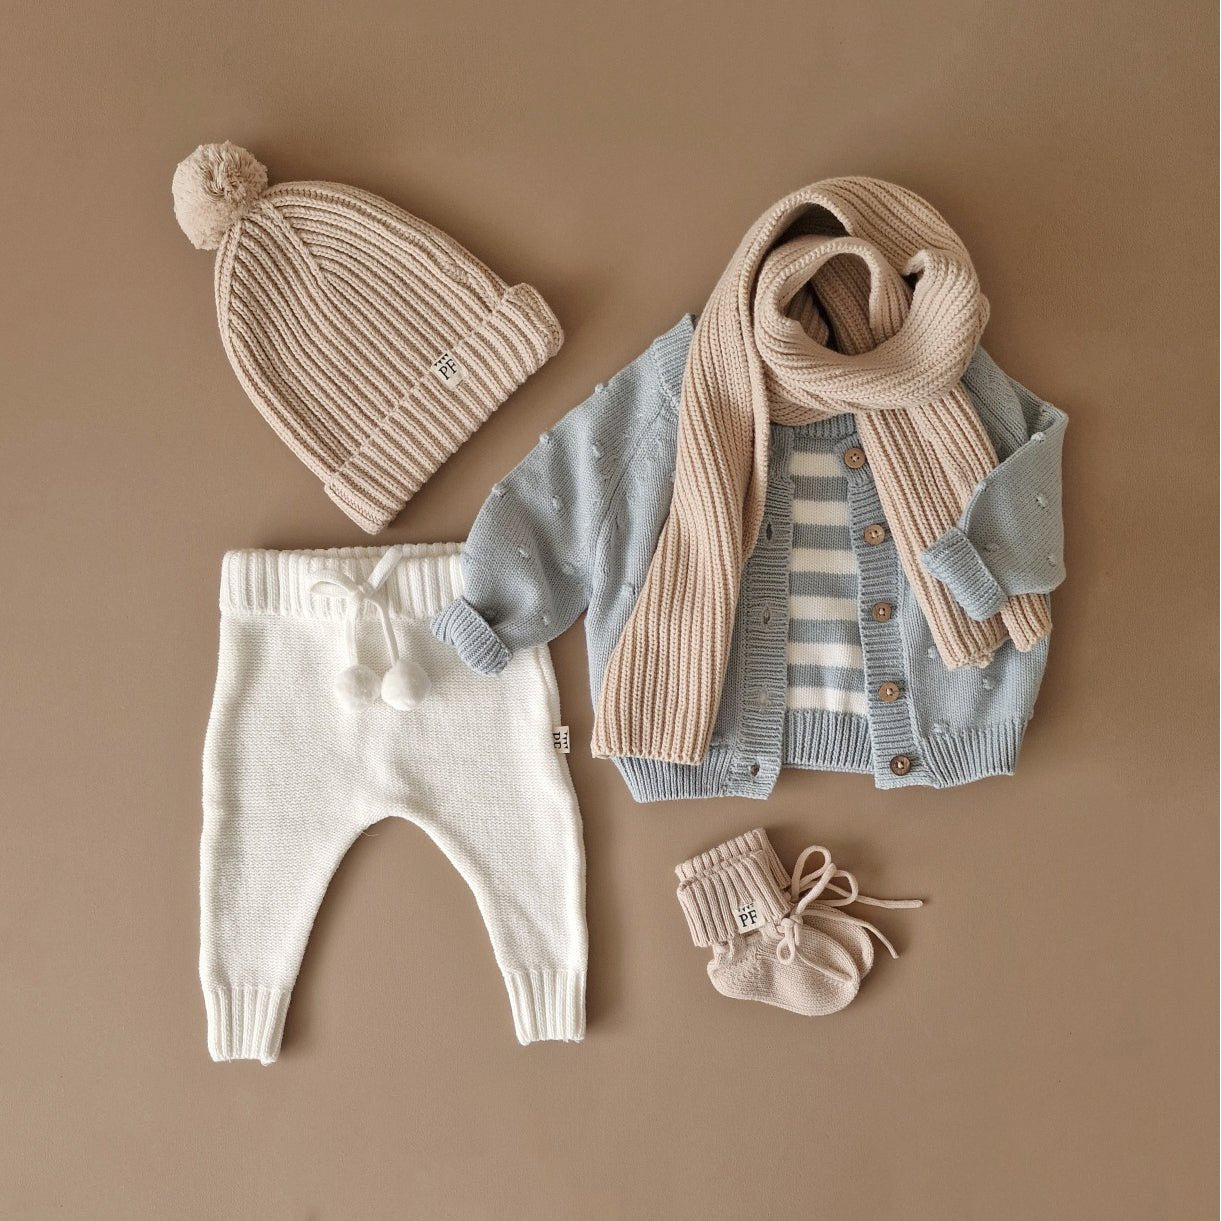 Striped Sweater - Short Sleeve - Cotton - Misty Blue & Ivory - Petit Filippe